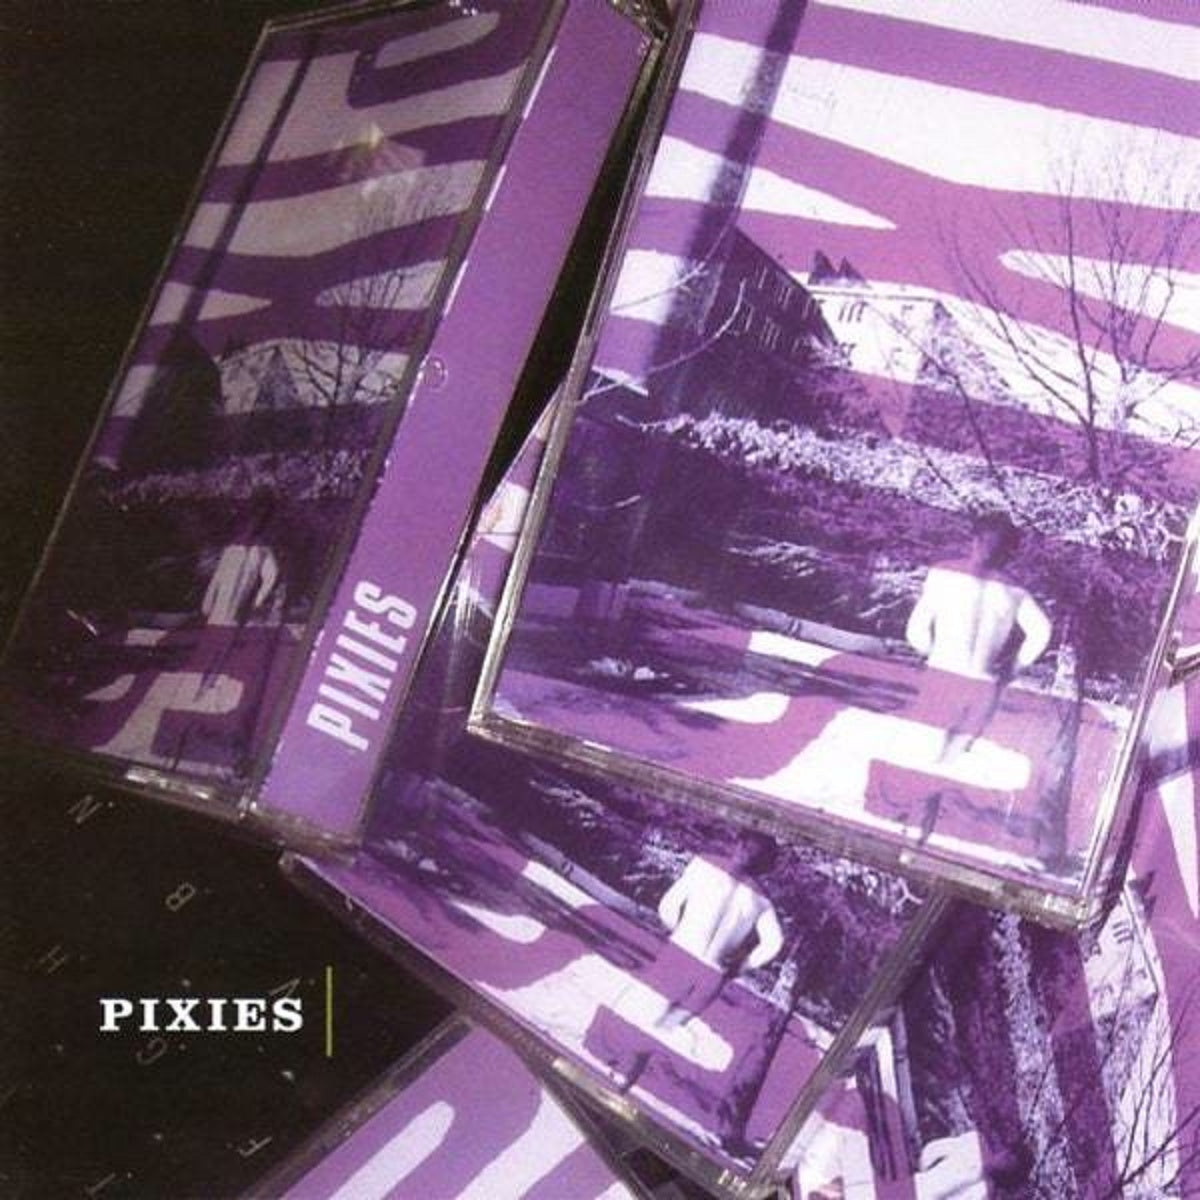 Pixies - Pixies - BROKEN 8 RECORDS